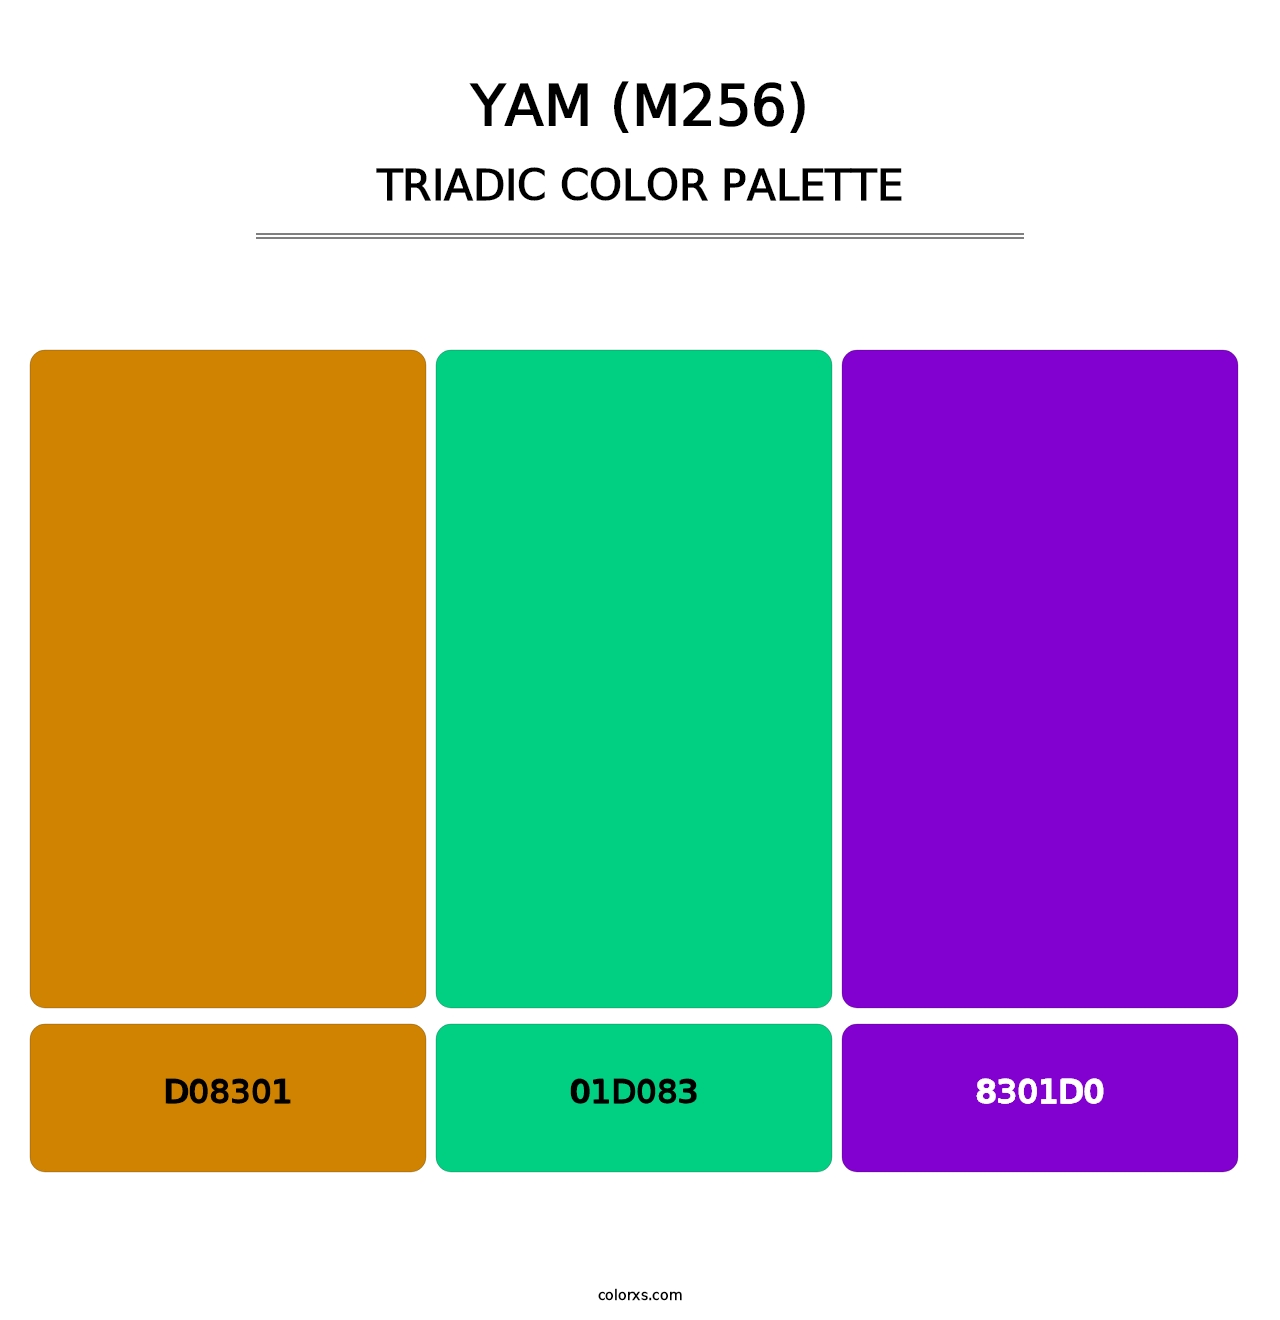 Yam (M256) - Triadic Color Palette